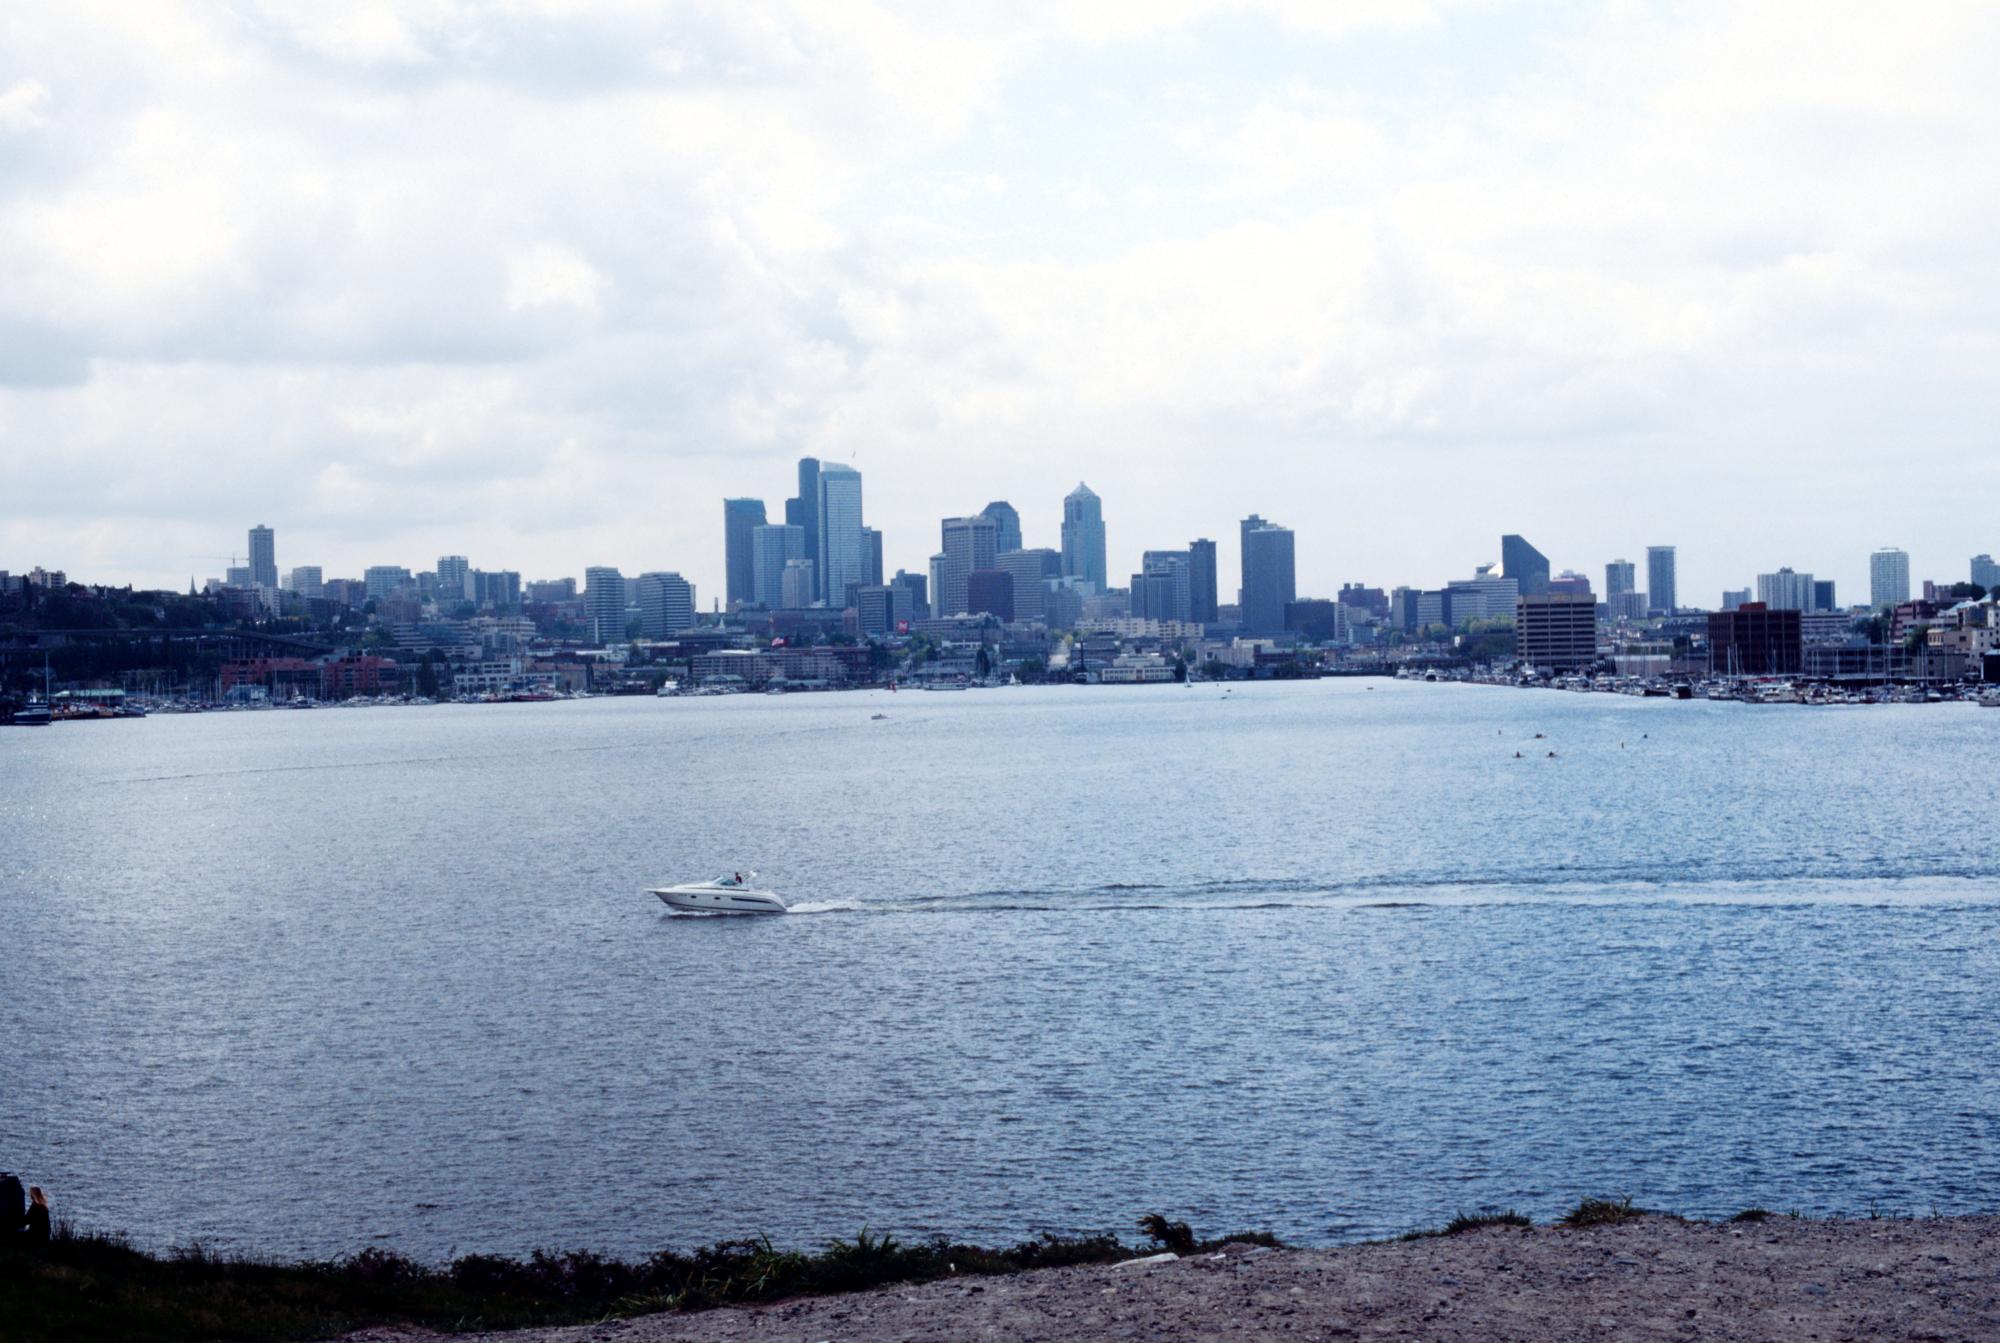 Seattle (1995) - Lake Union